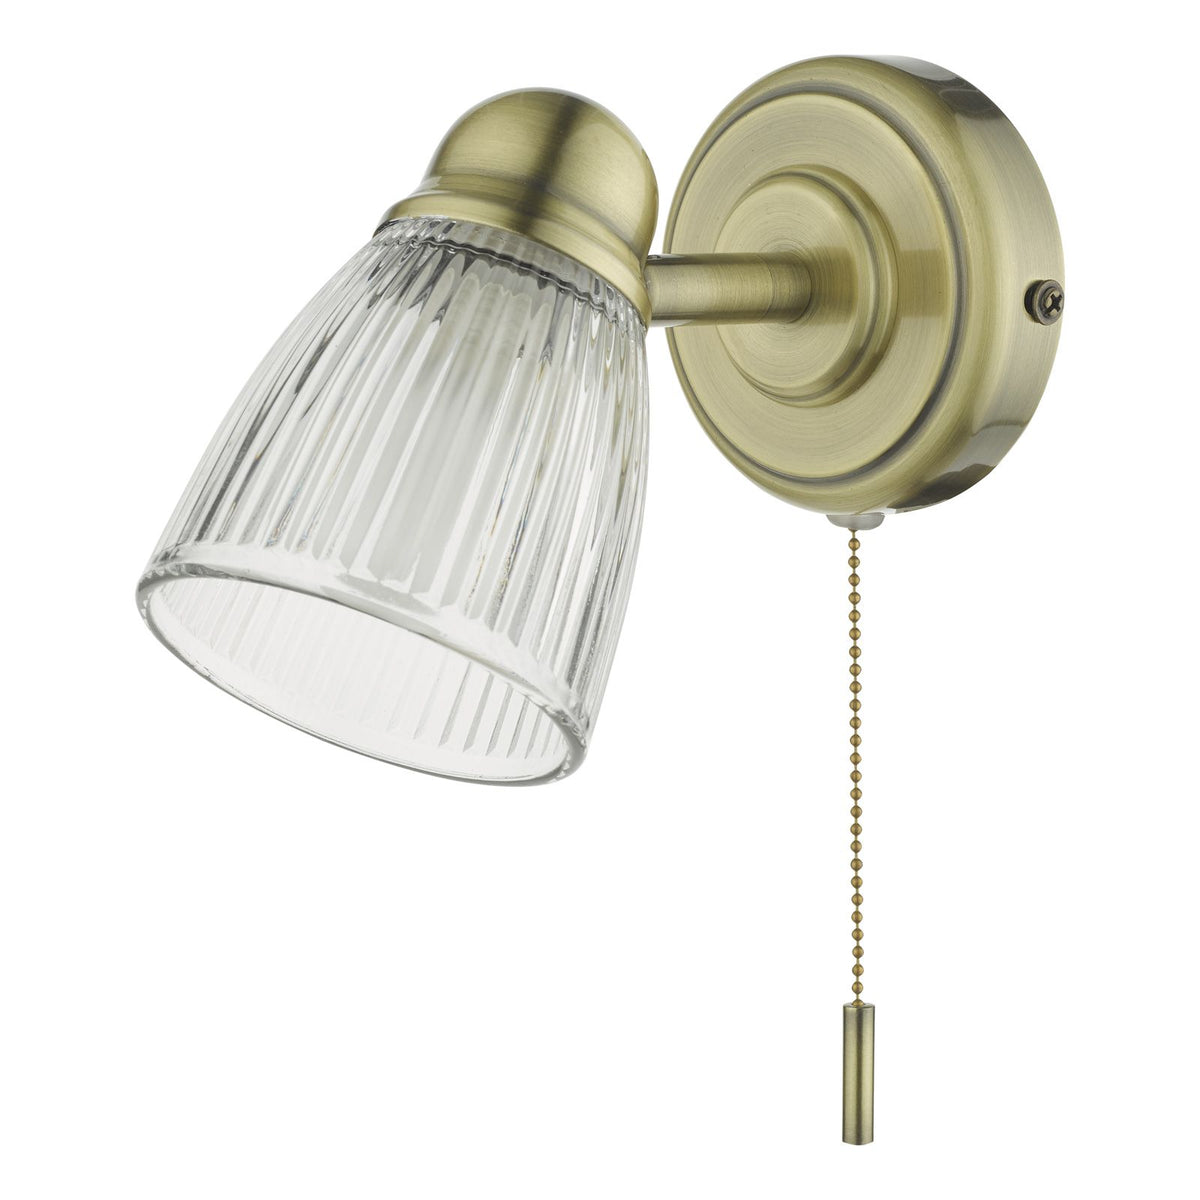 Cedric Bathroom Single Wall Spotlight Antique Brass/Polished Chrome Glass IP44